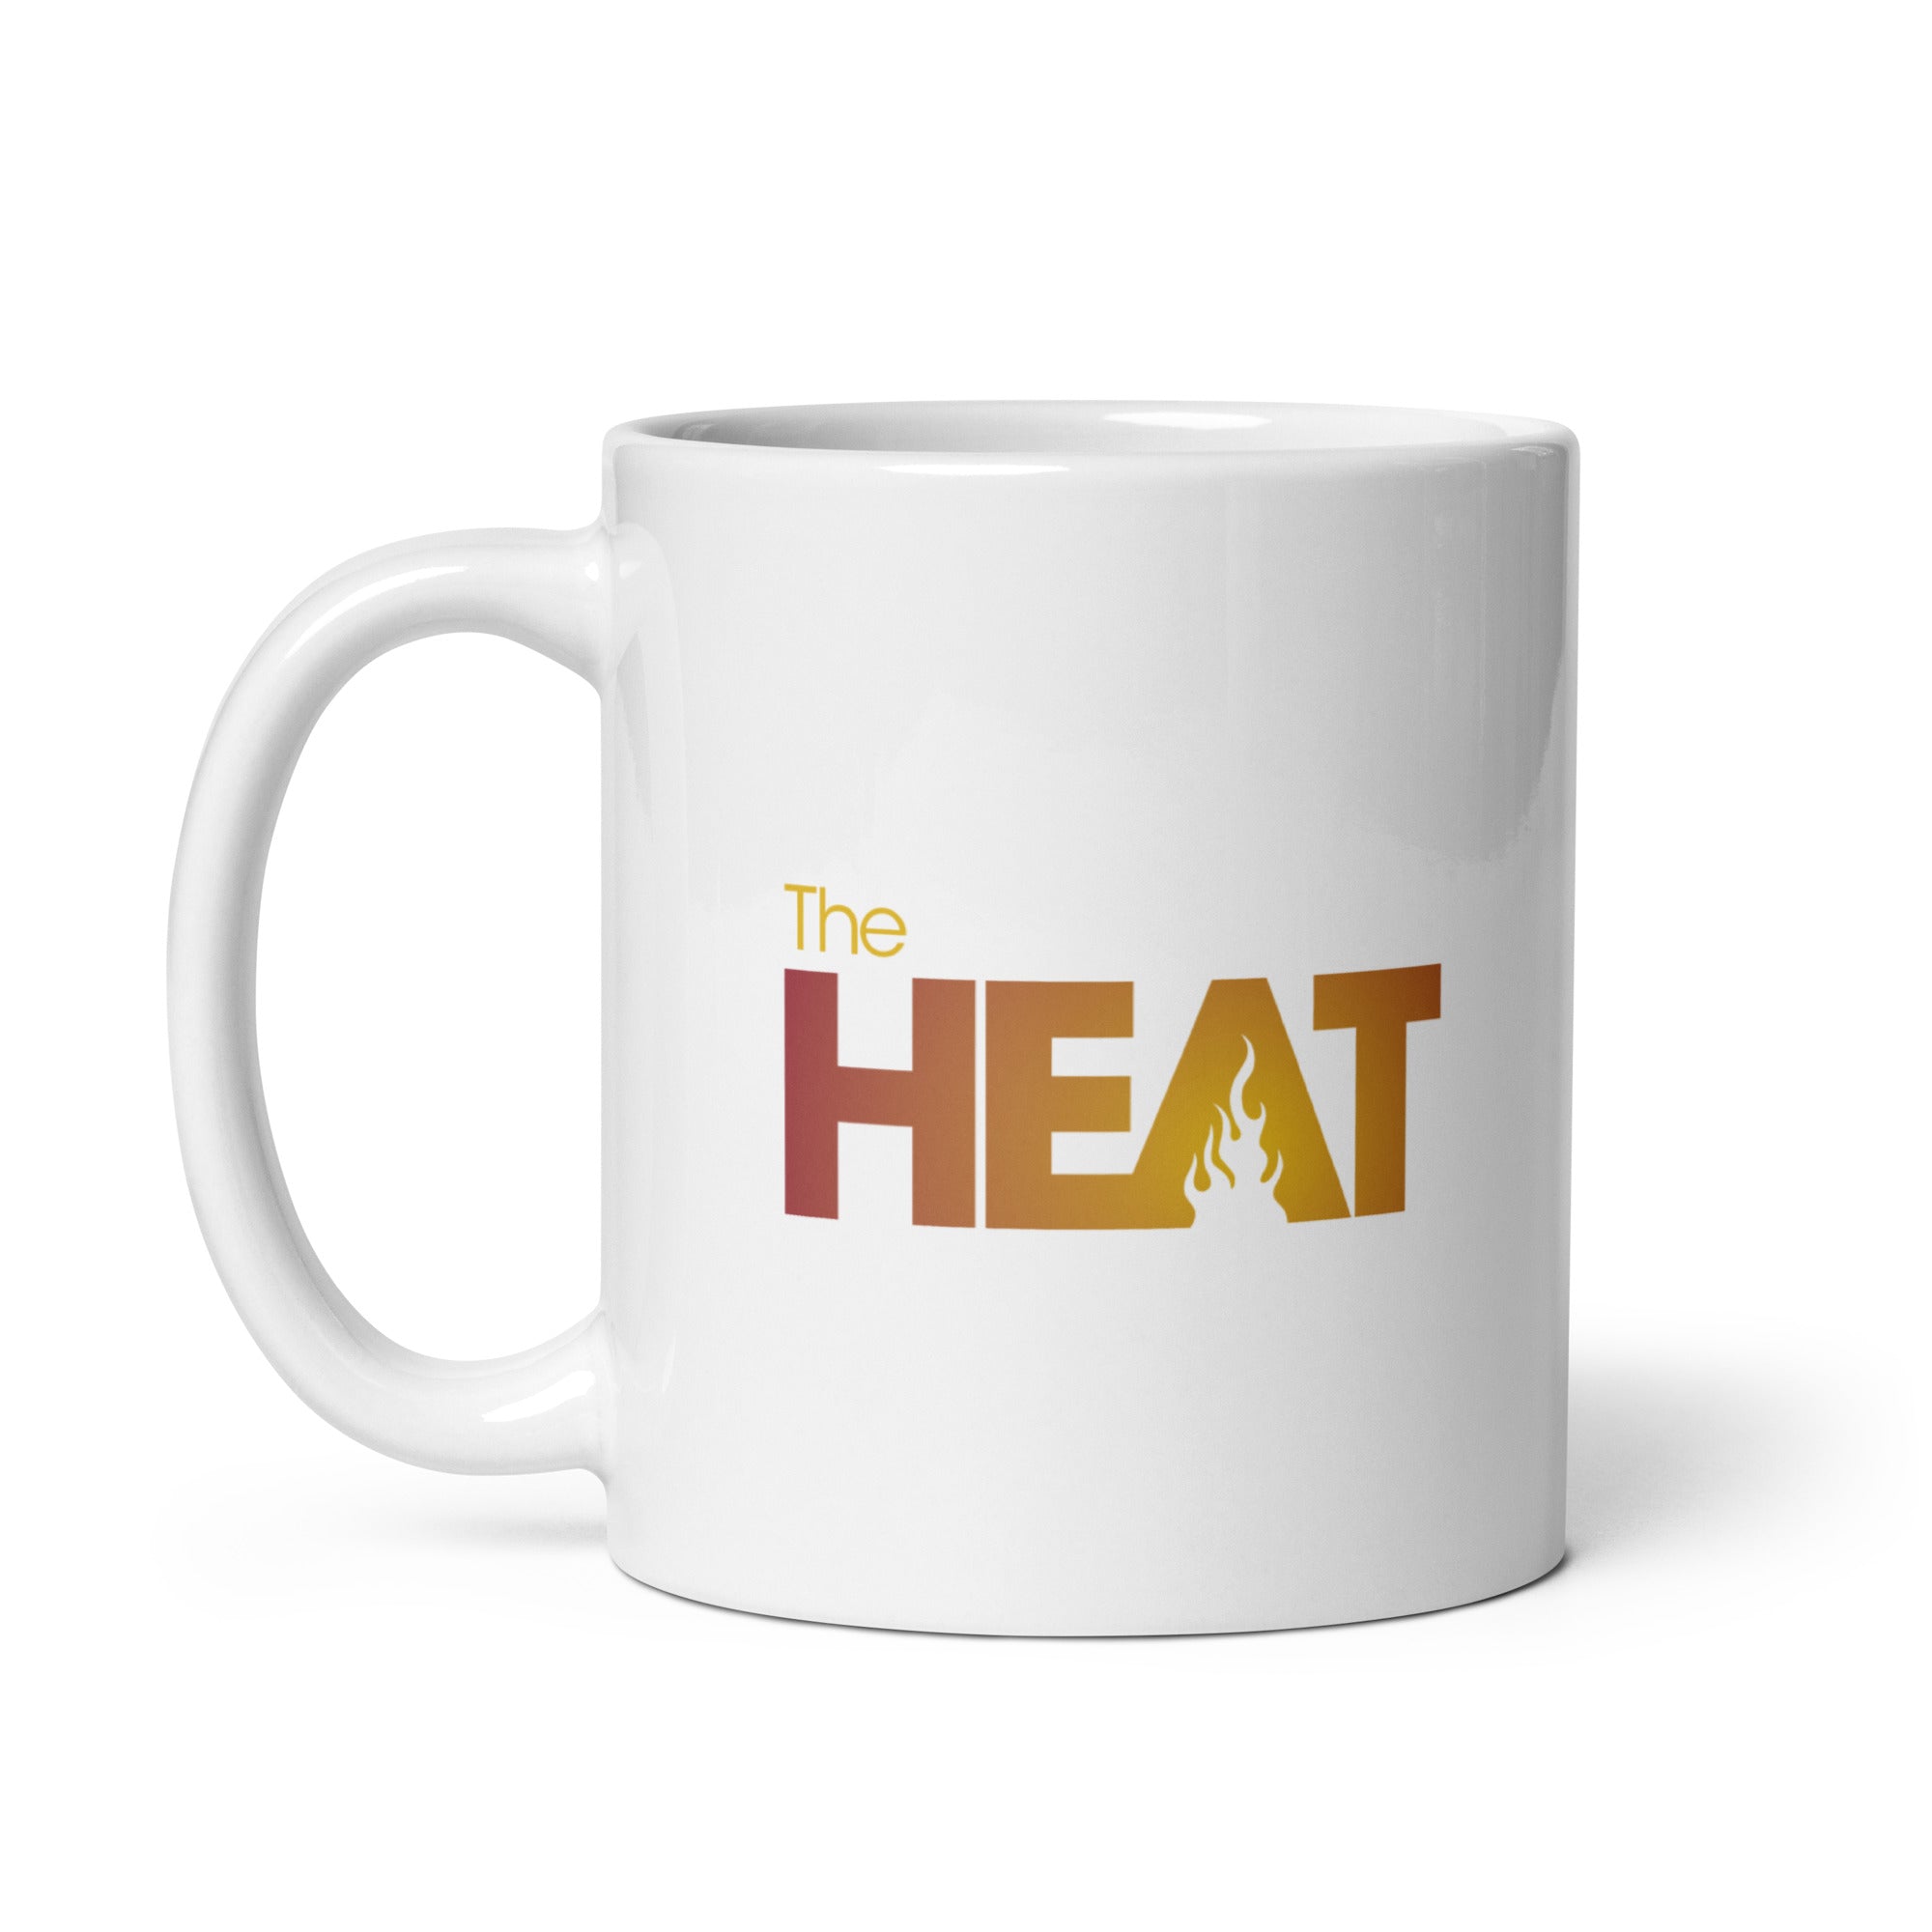 The Heat: Mug